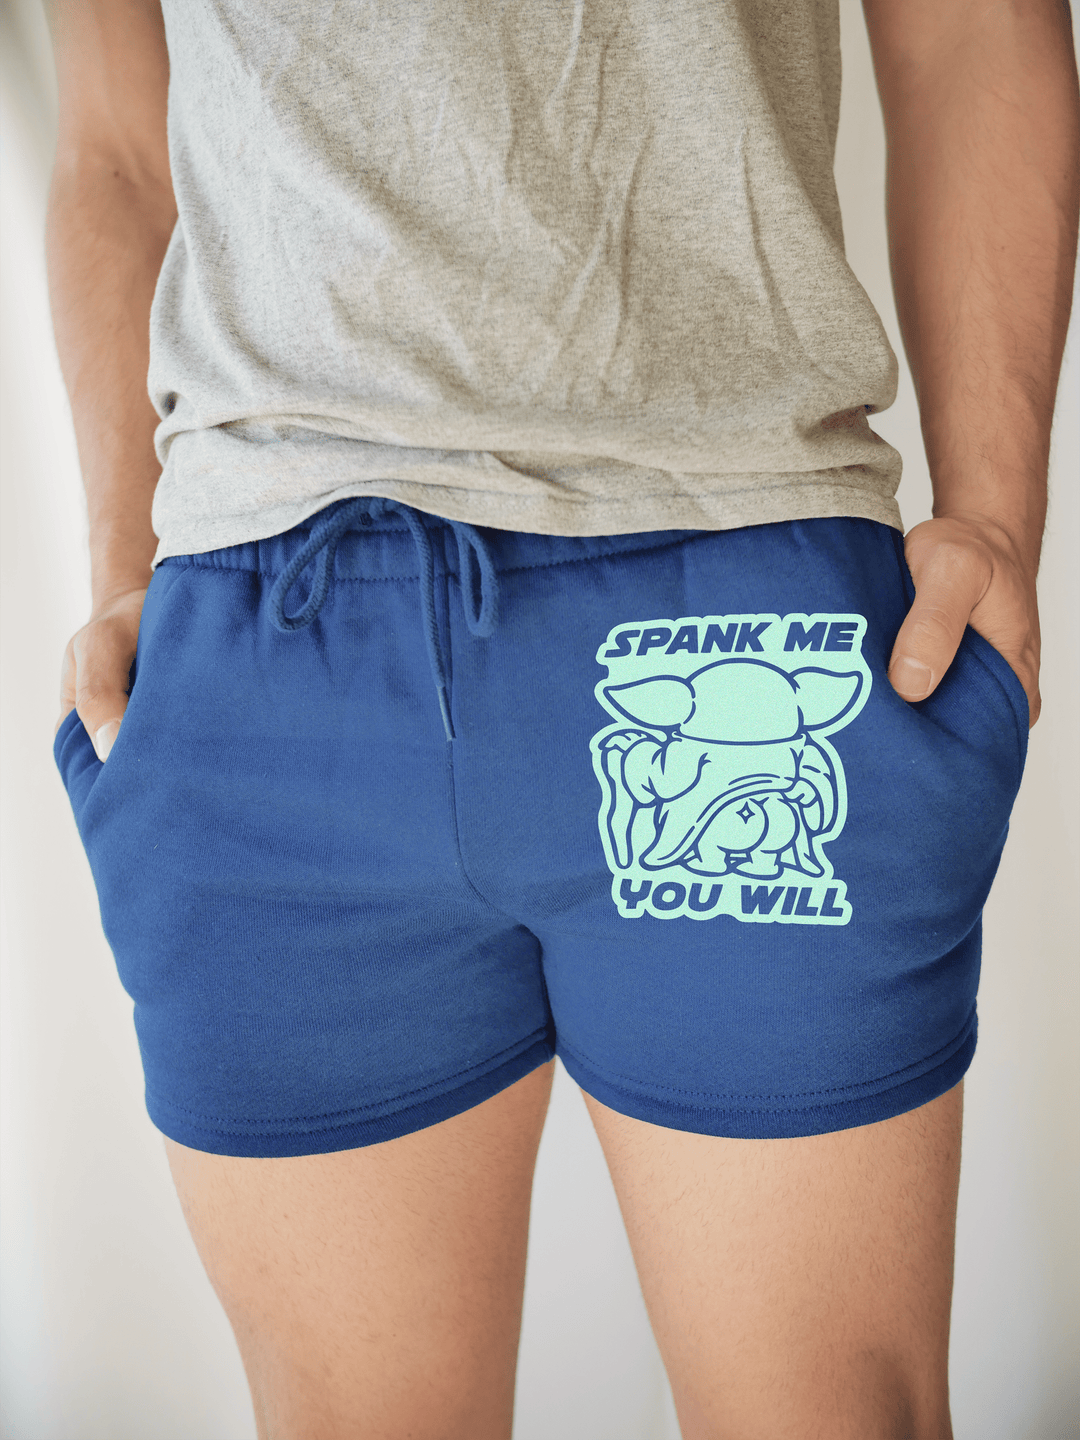 PixelThat Punderwear Shorts Royal Blue / S / Front Spank Me You Will Men's Gym Shorts